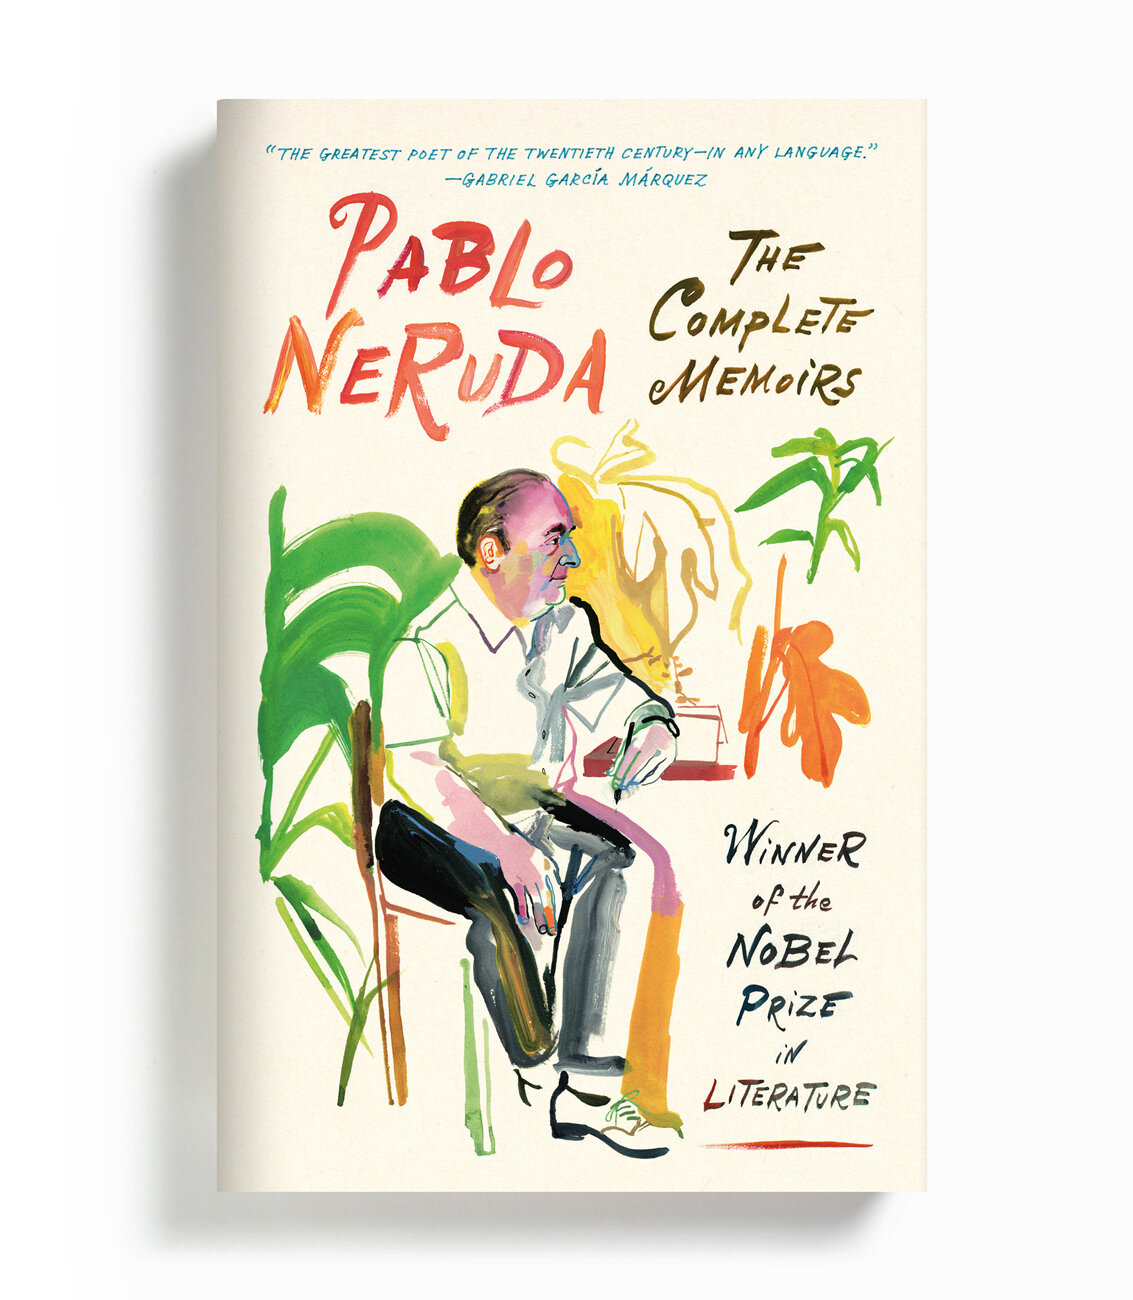 Pablo Neruda: The Complete Memoirs